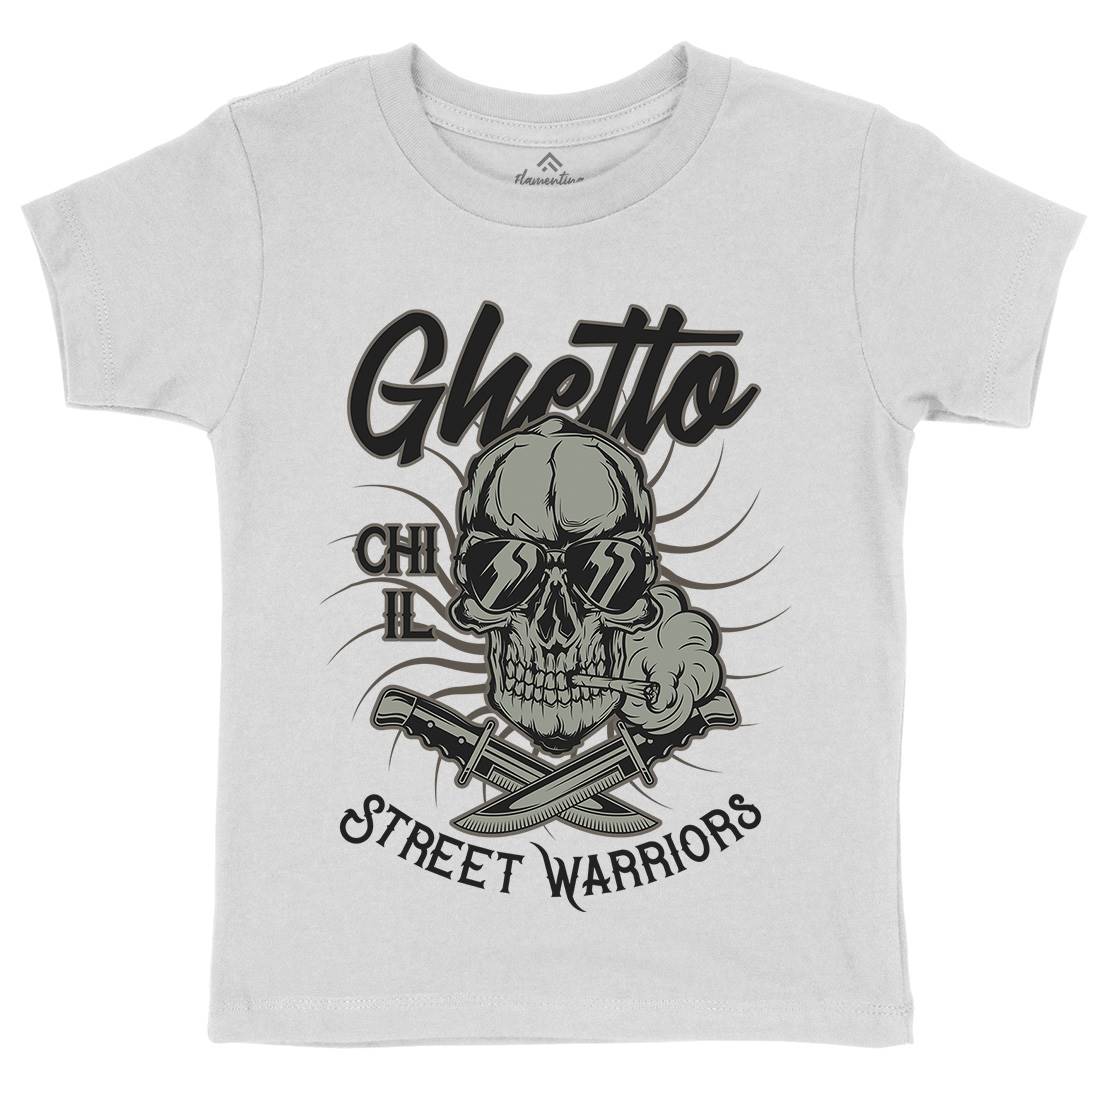 Ghetto Street Warriors Kids Organic Crew Neck T-Shirt Retro D937